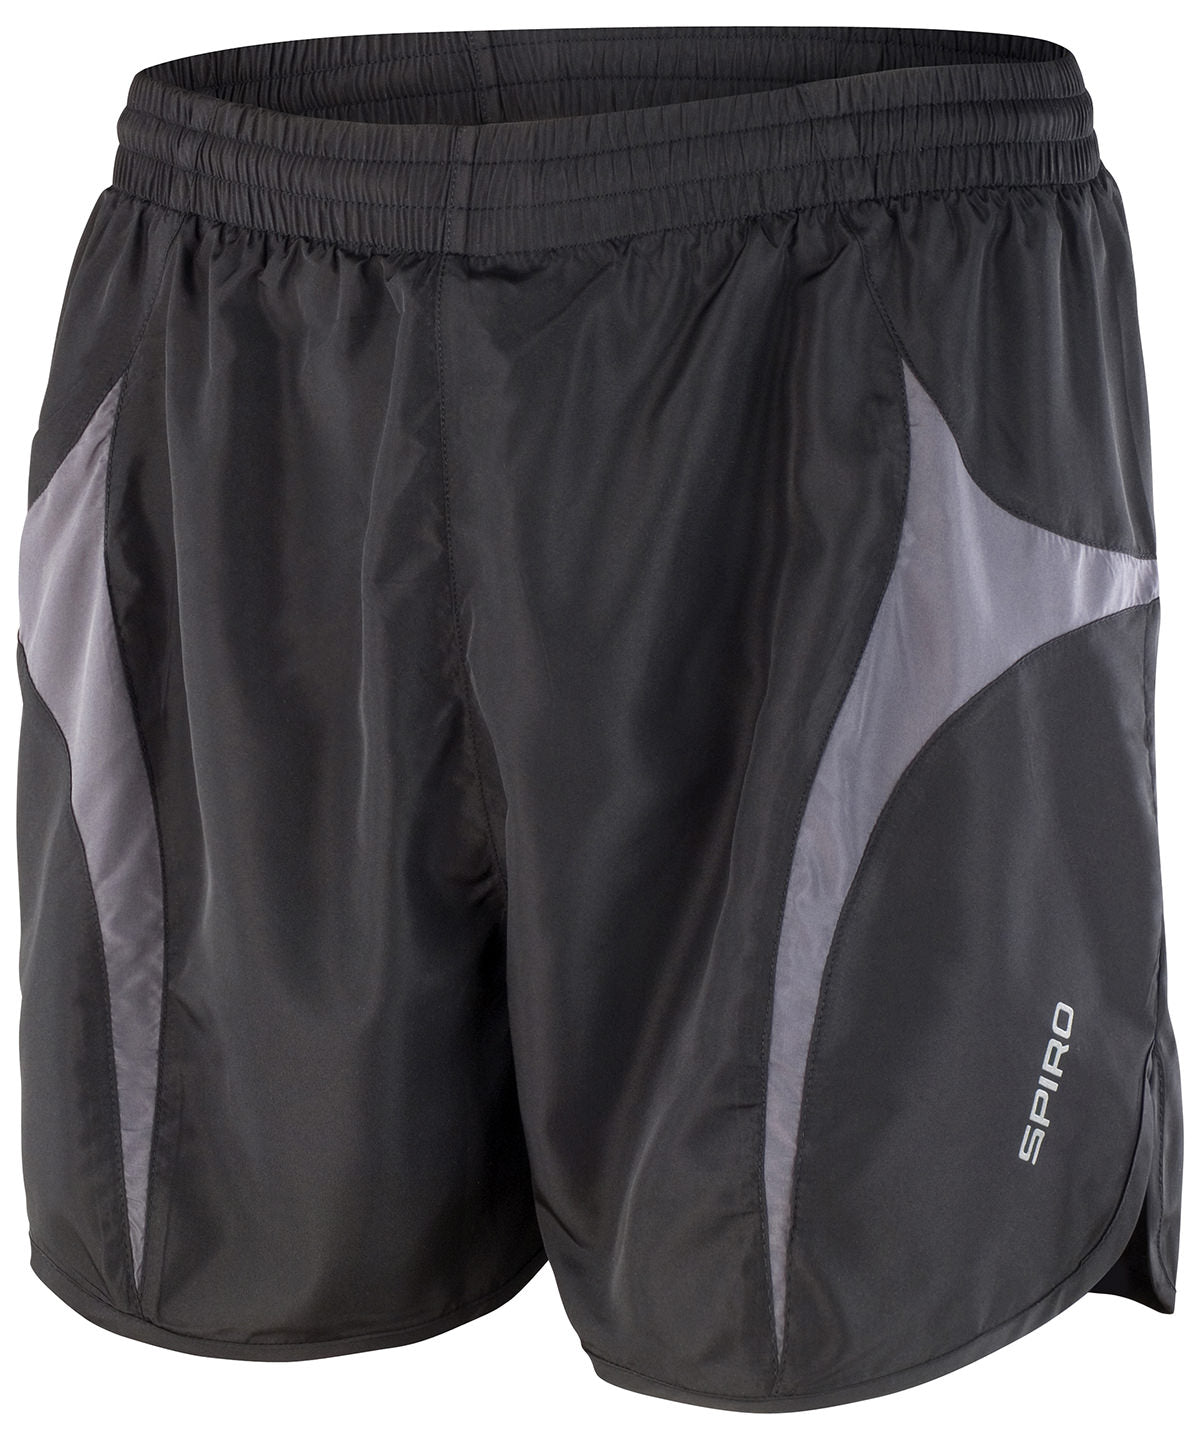 Stuttbuxur - Spiro Micro-lite Running Shorts